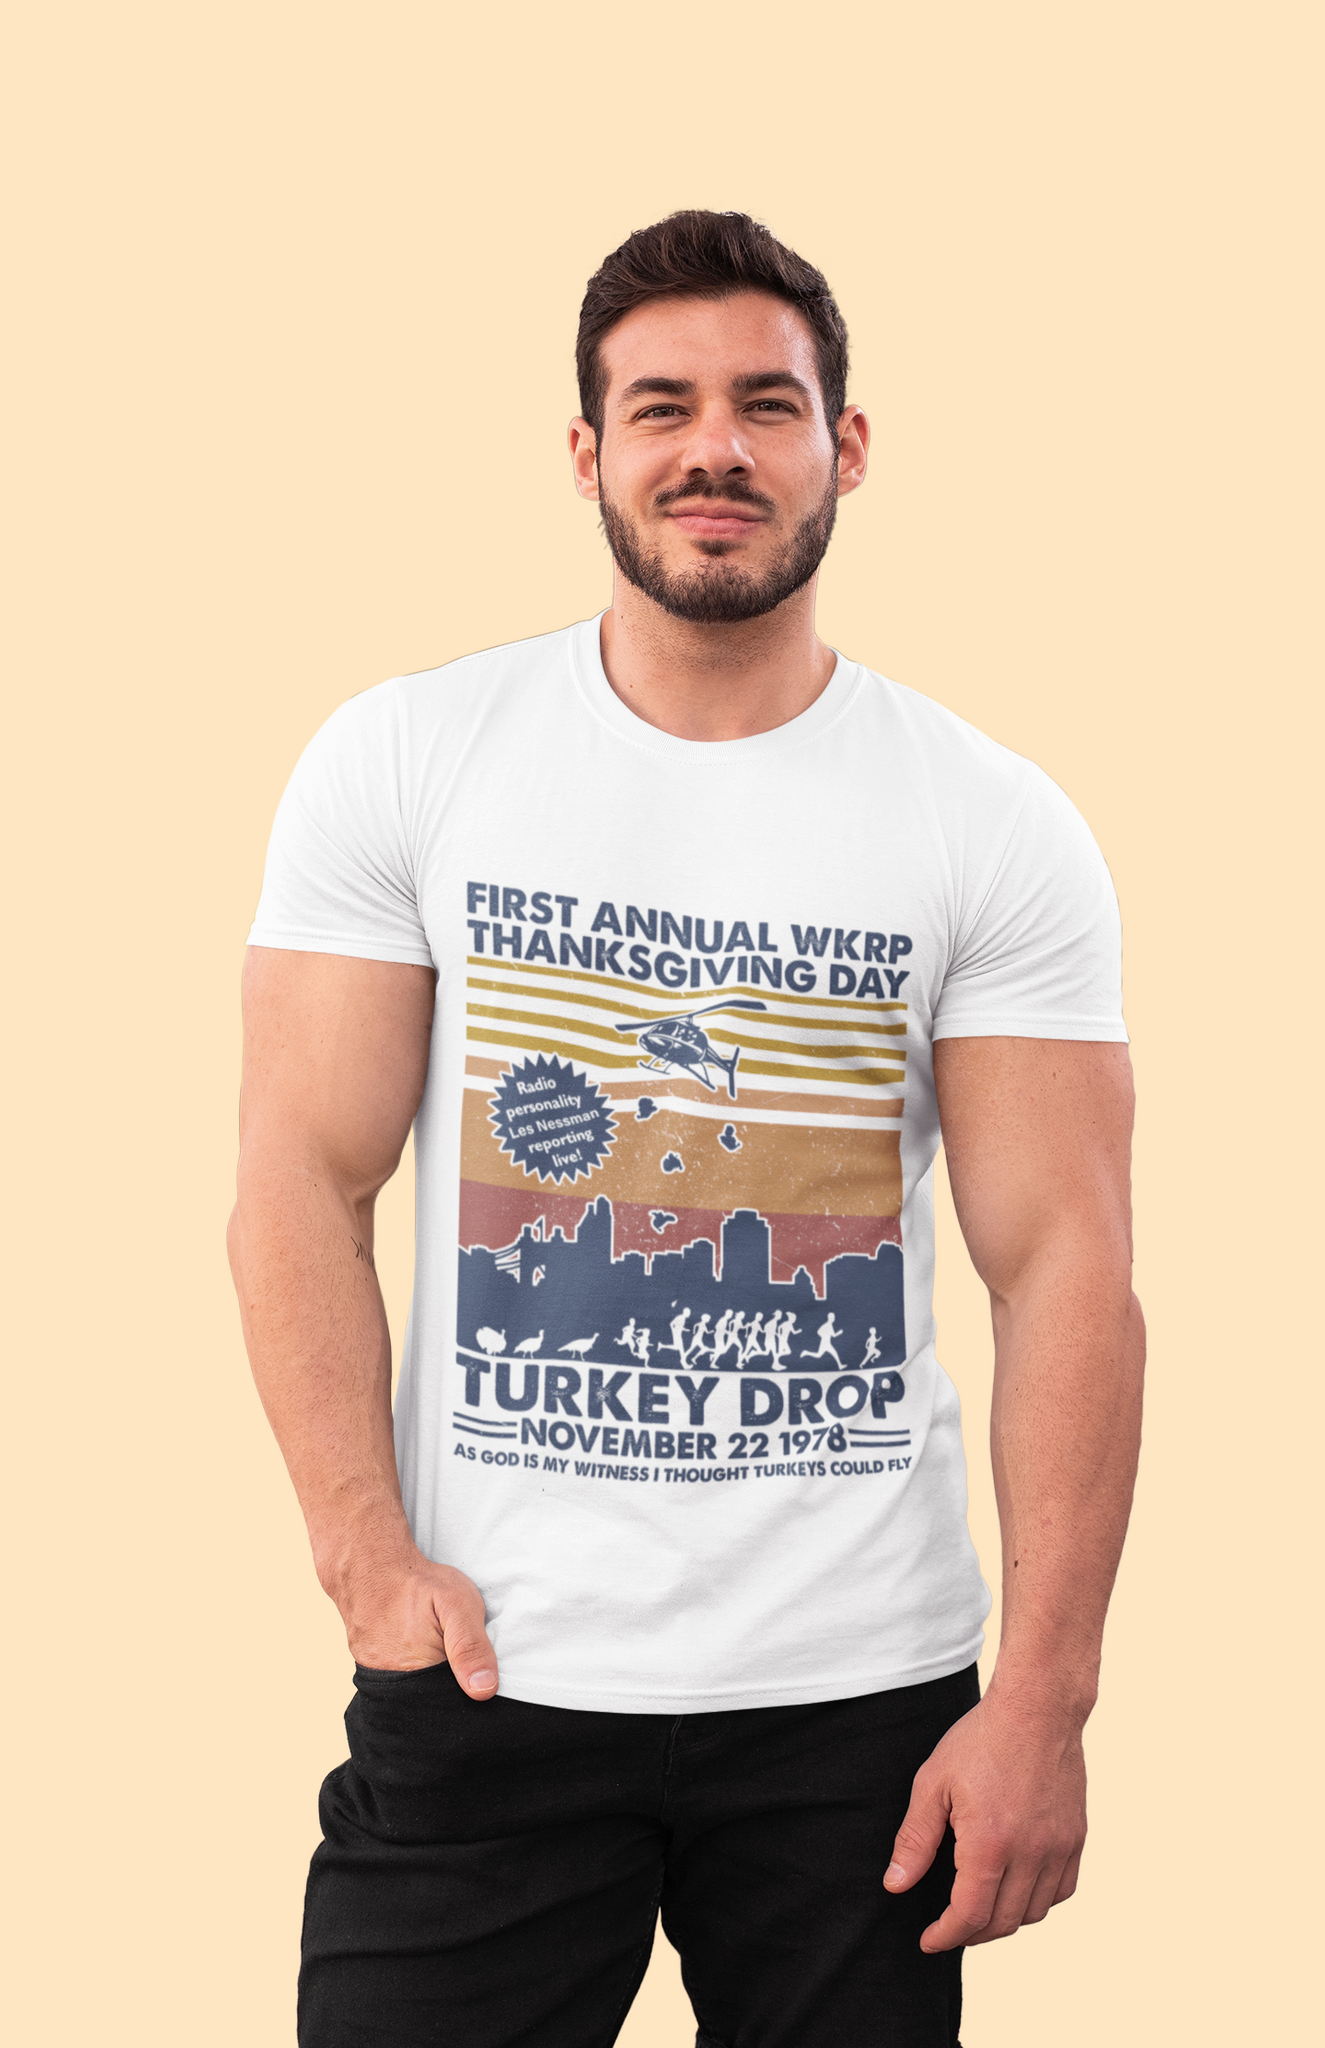 WKRP In Cincinnati Vintage T Shirt, First Annual WKRP Thanksgiving Day Turkey Drop Tshirt, Thanksgiving Gifts